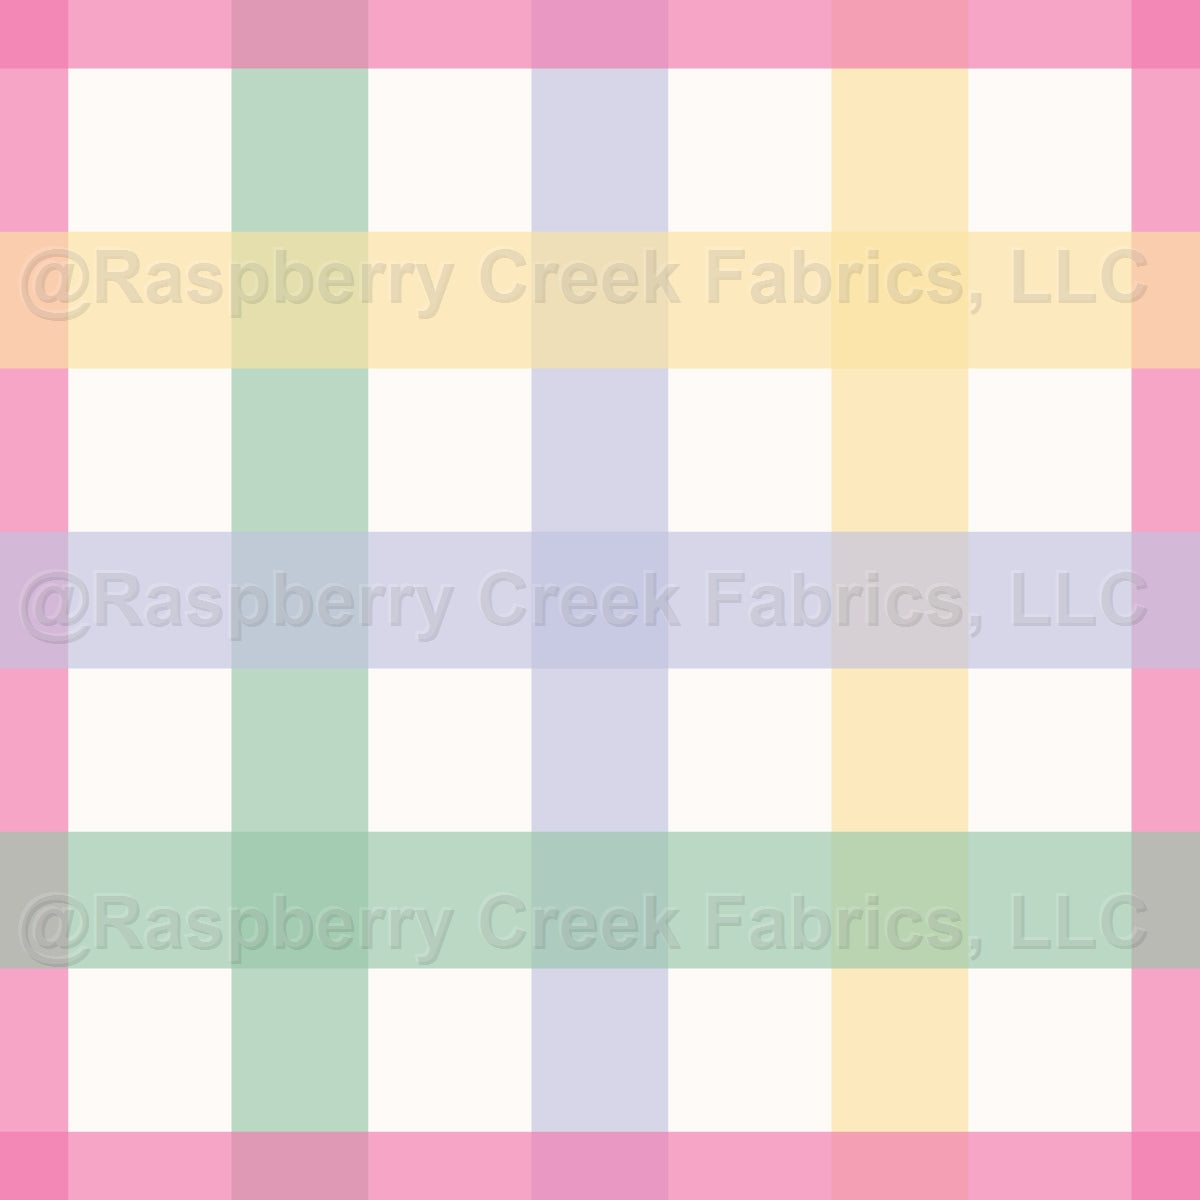 Spring Plaid , Raspberry Creek Fabrics, watermarked